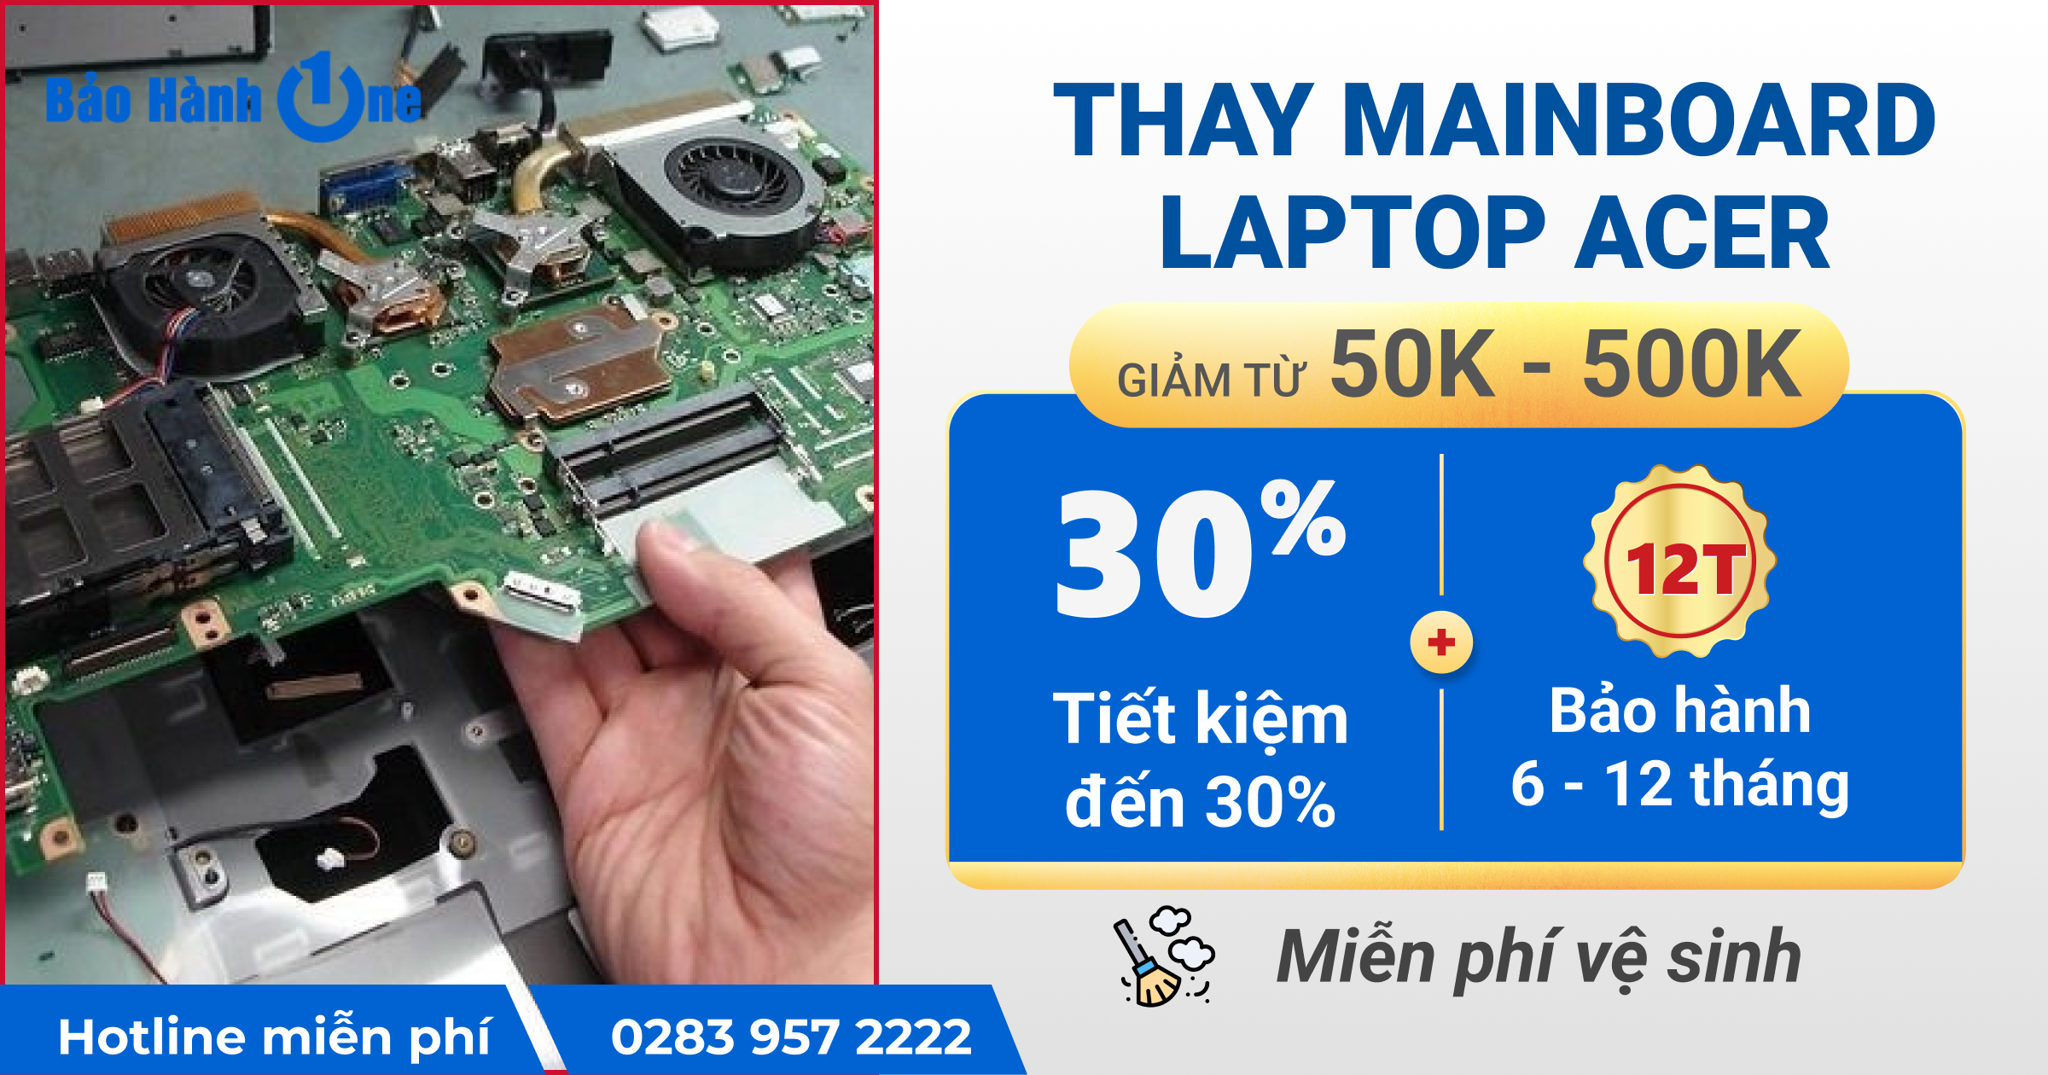 Bảng Giá Mainboard Laptop Acer